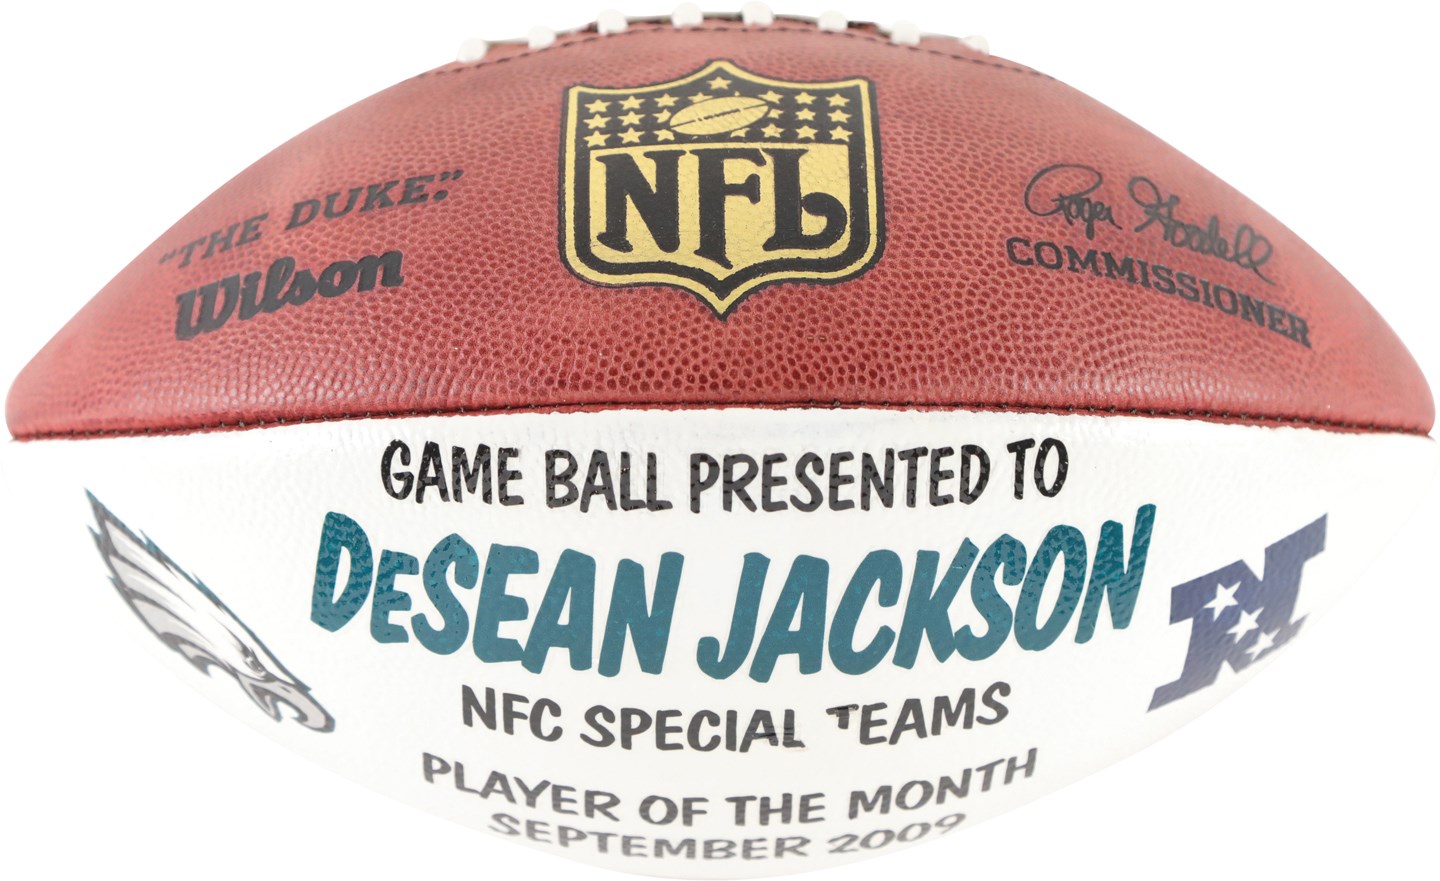 September 2009 DeSean Jackson NFC Special Teams Player of the Month Presentation Football